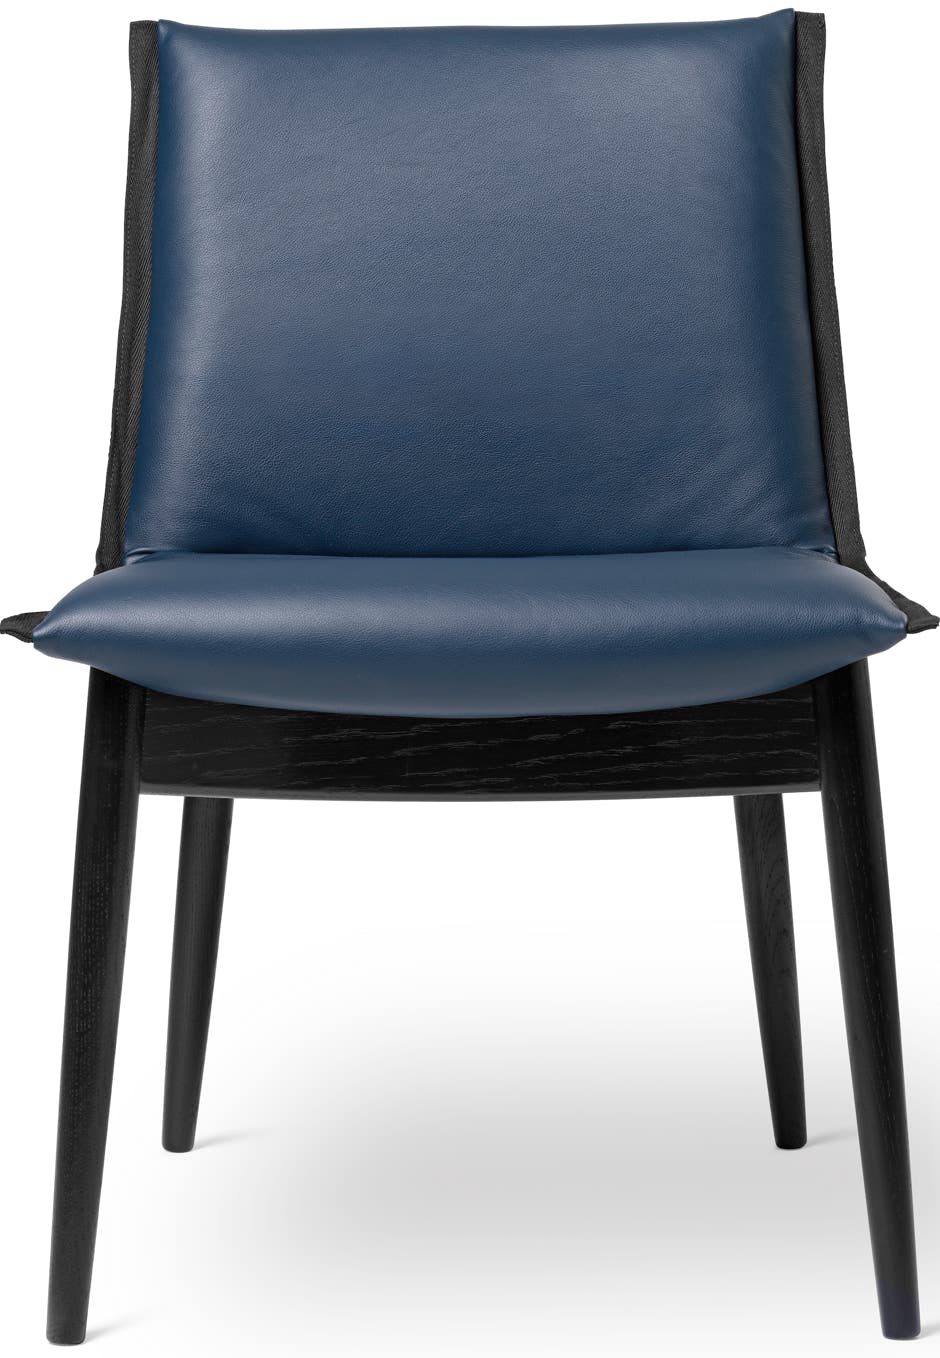 E004 Embrace Chair  Carl Hansen & Søn  EOOS, 2019